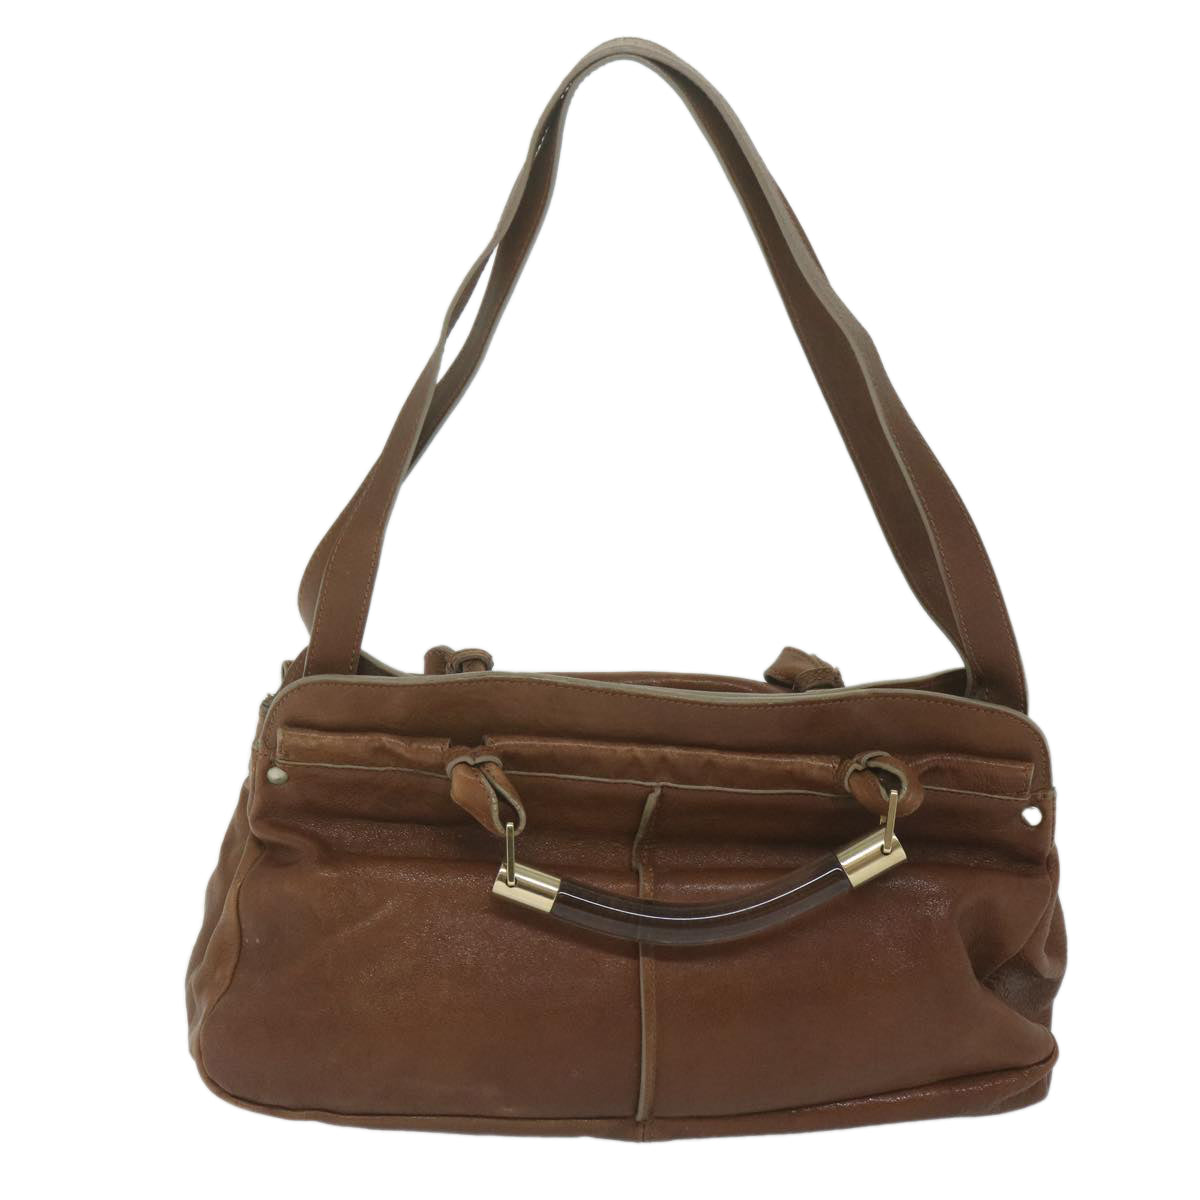 Chloe Hand Bag Leather Brown 01 08 53 12 Auth yk9860 - 0